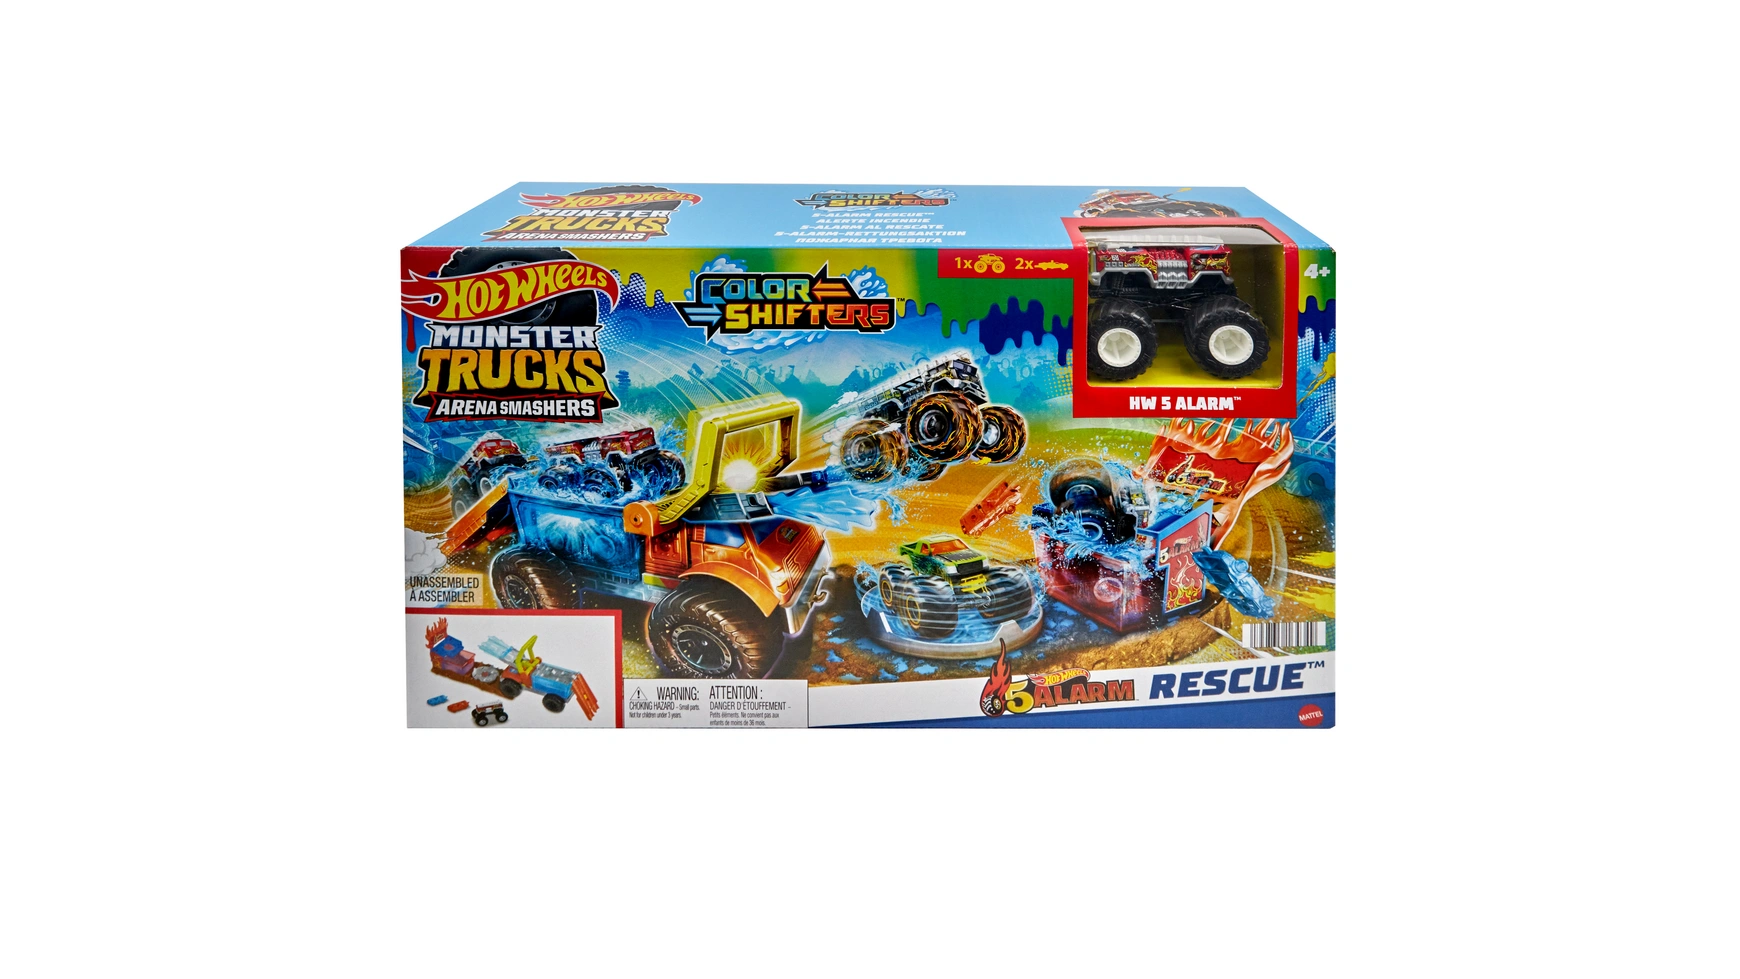 Hot wheels monster trucks arena world: спасательная миссия с 5 сигналами тревоги Mattel